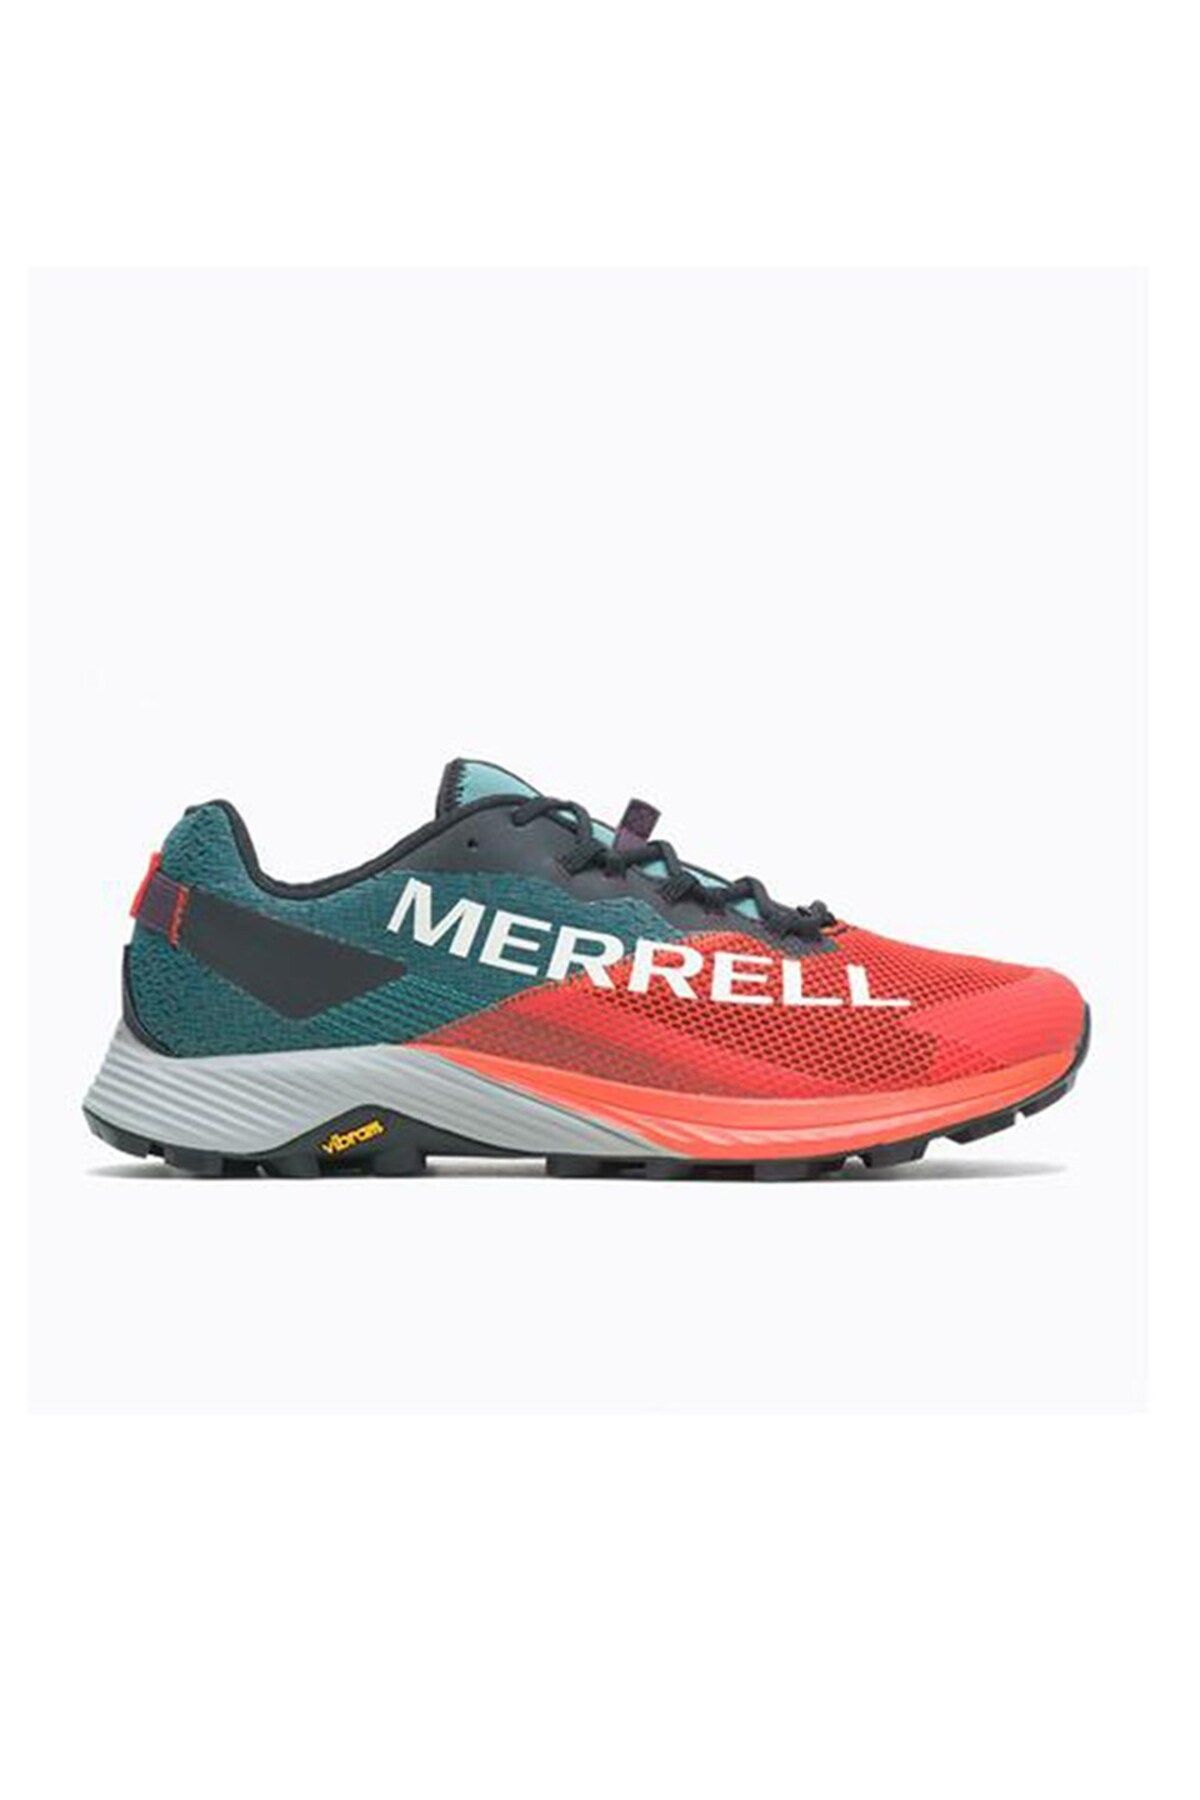 Merrell Erkek Outdoor Ayakkabı J067141 - Turuncu